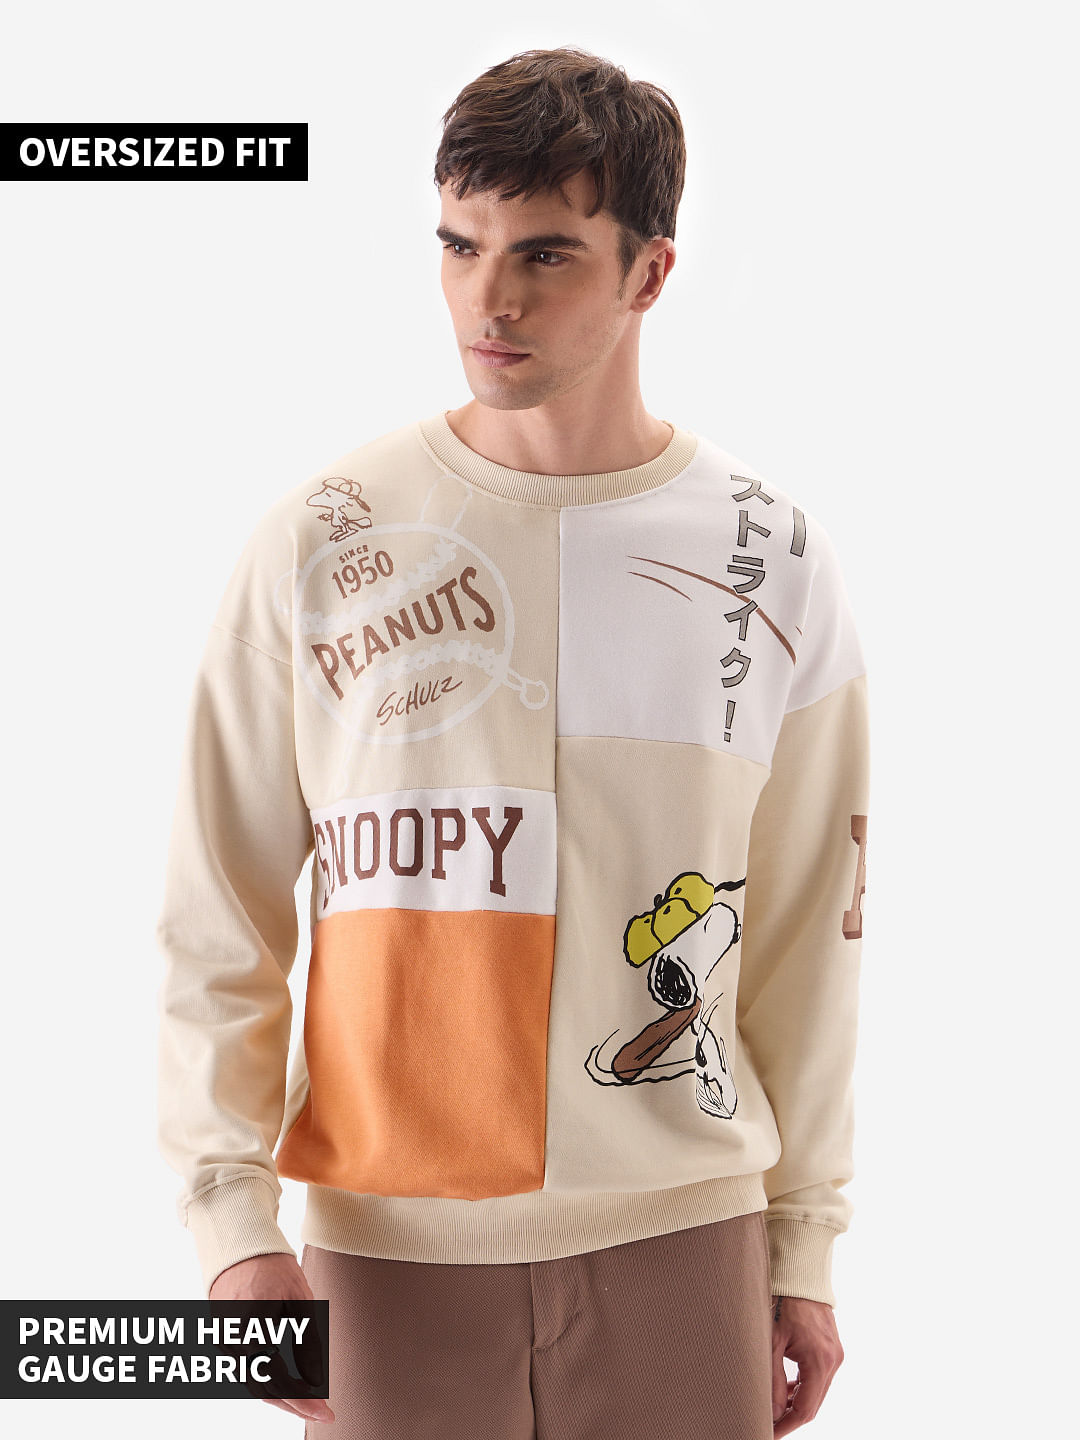 Buy Peanuts: The Big Hit Mens Oversized Sweatshirt Online